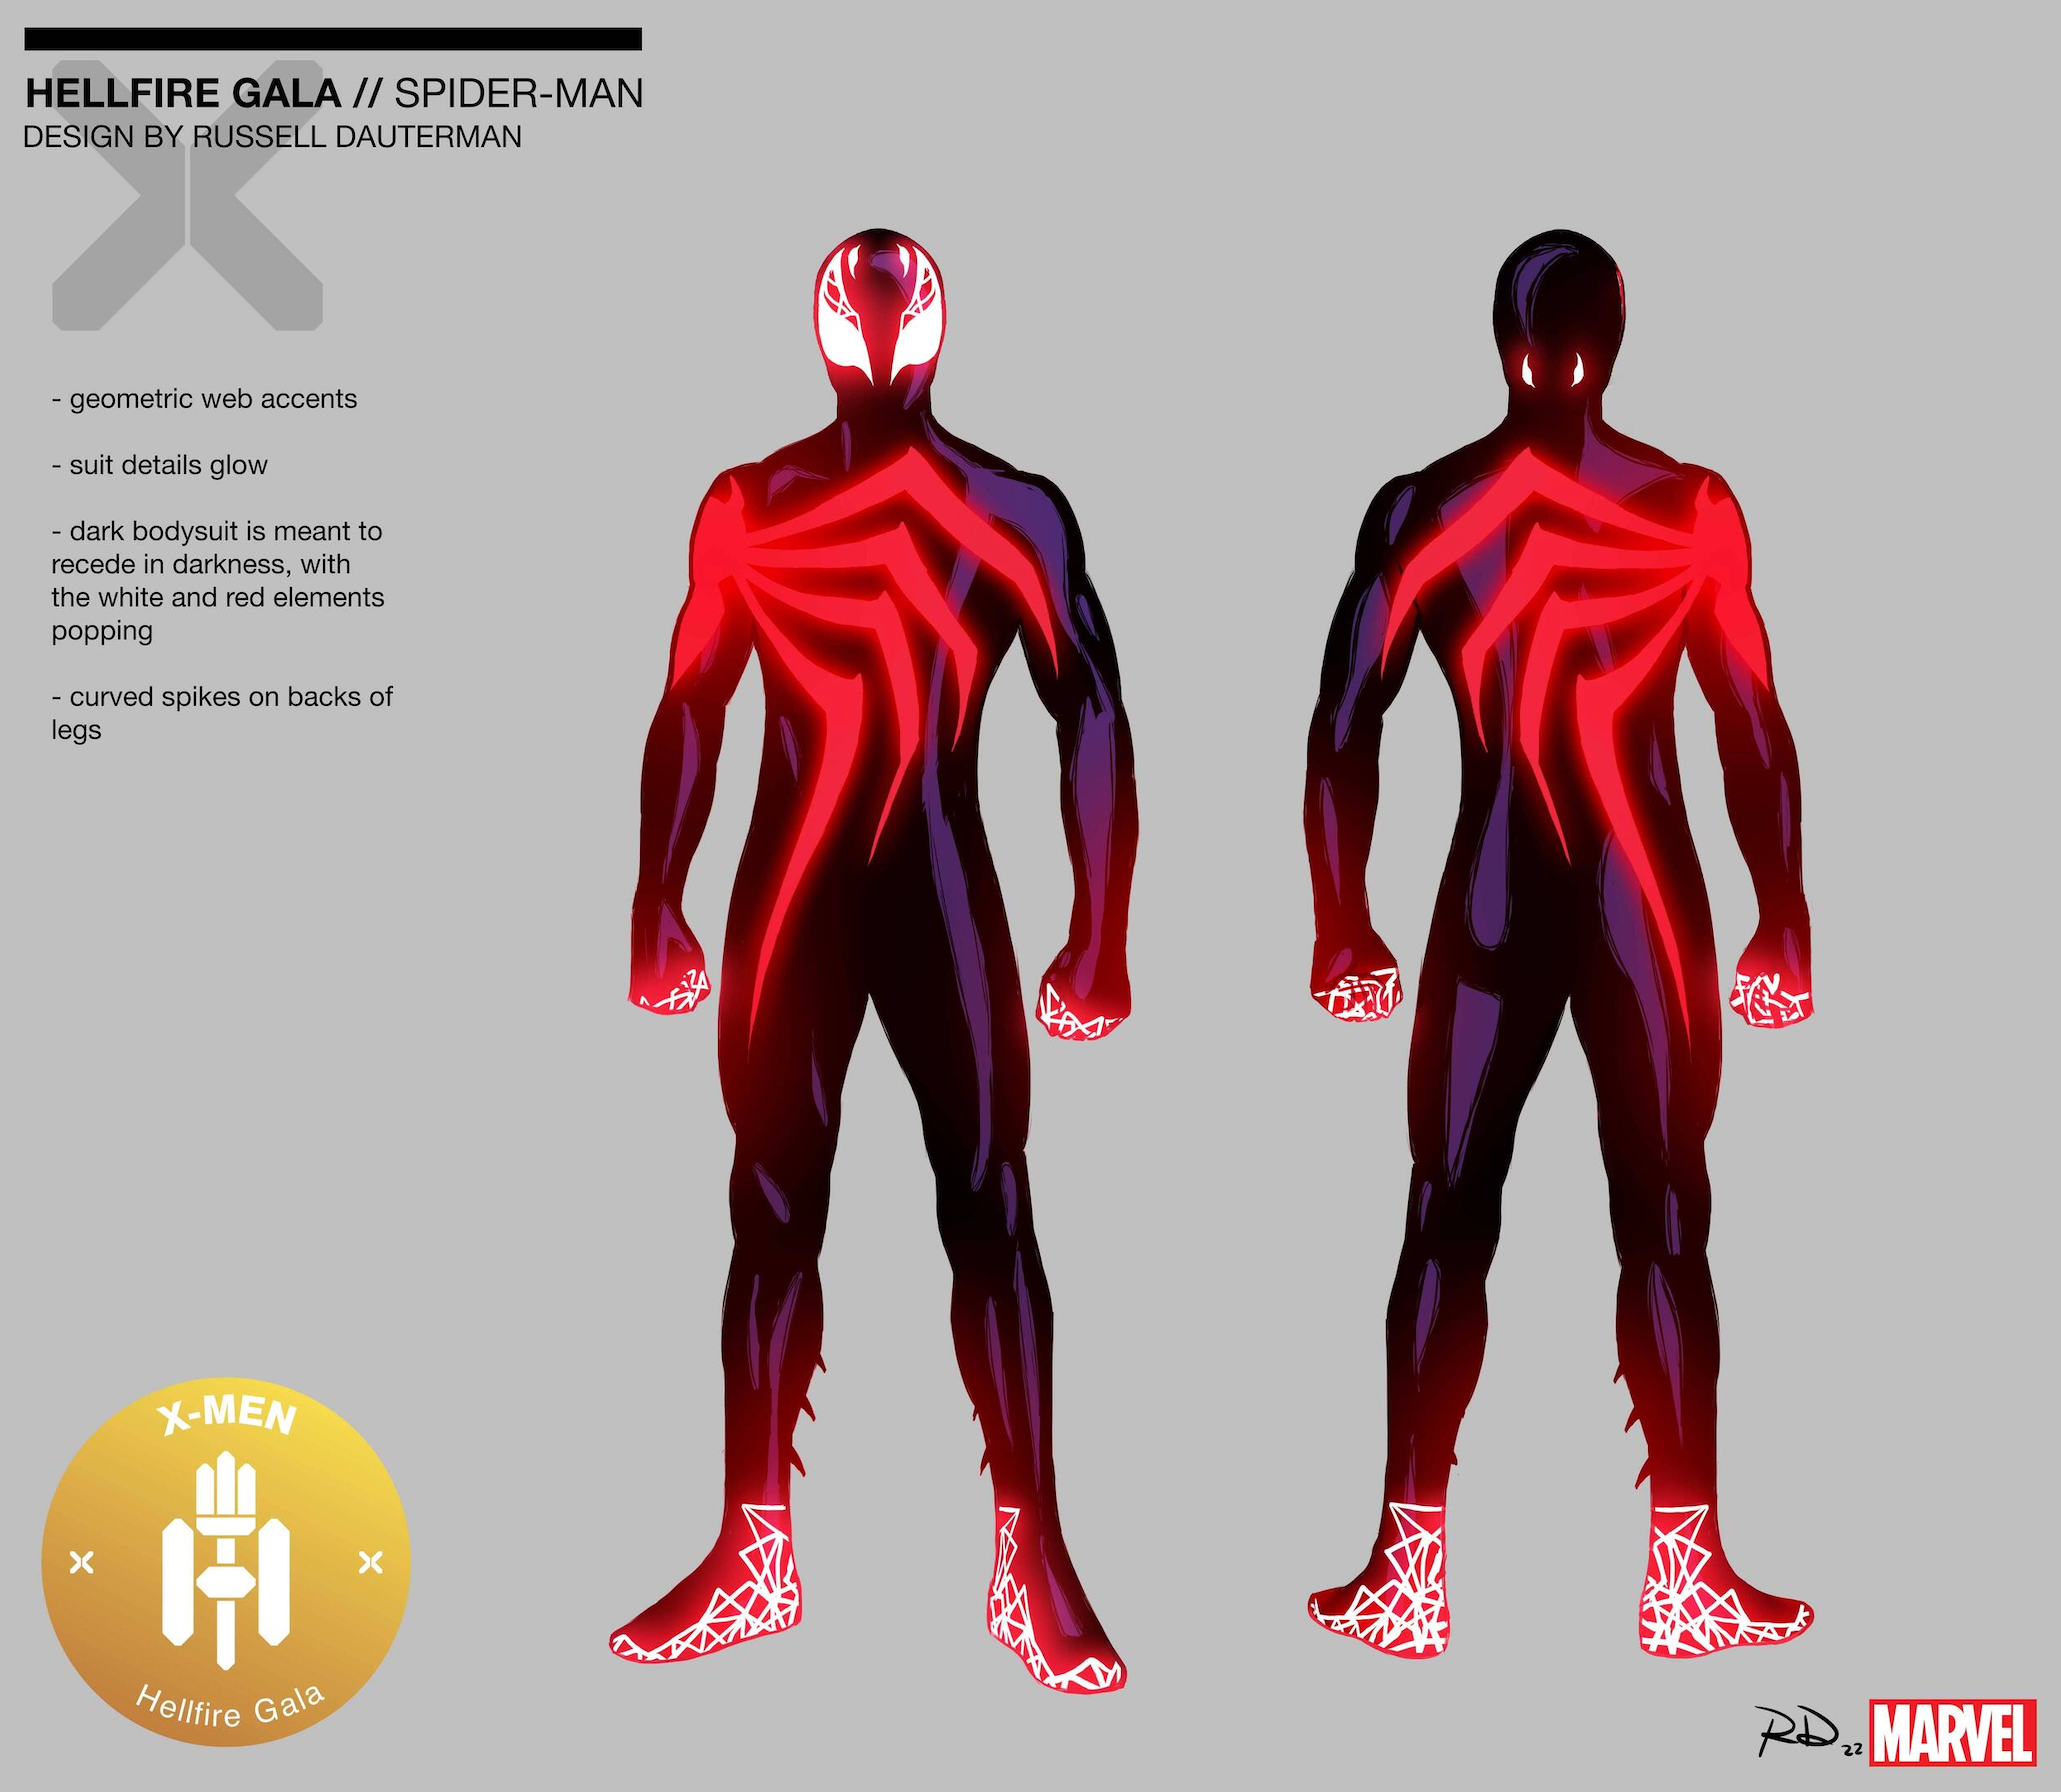 Spider Man reveals his Hellfire suit